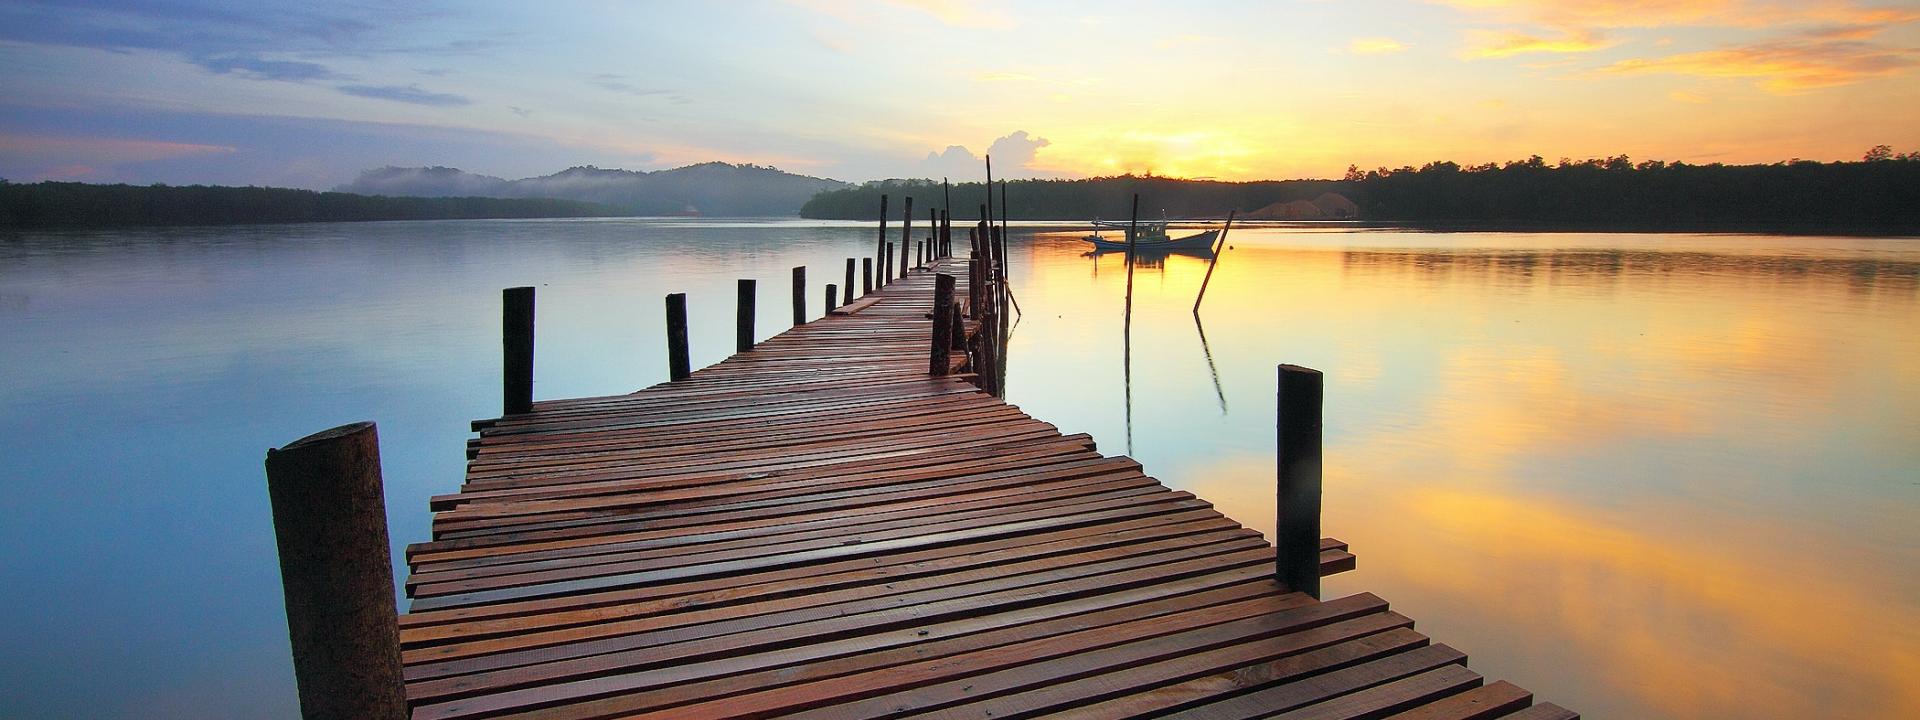 Dock on a lake